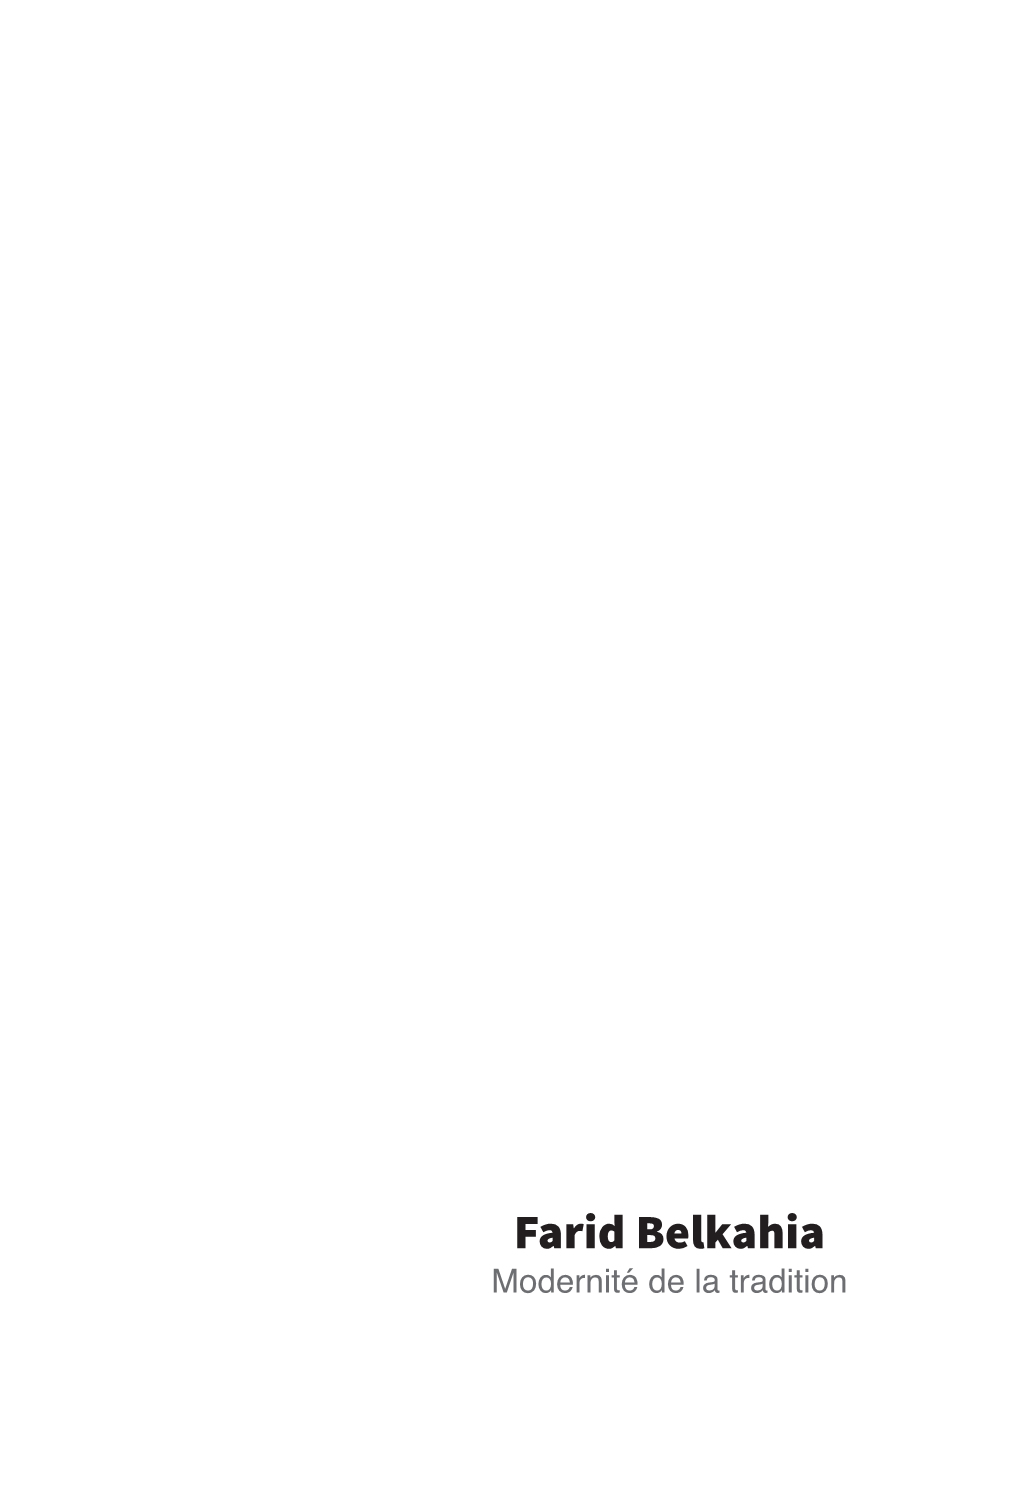 Farid Belkahia.Pdf